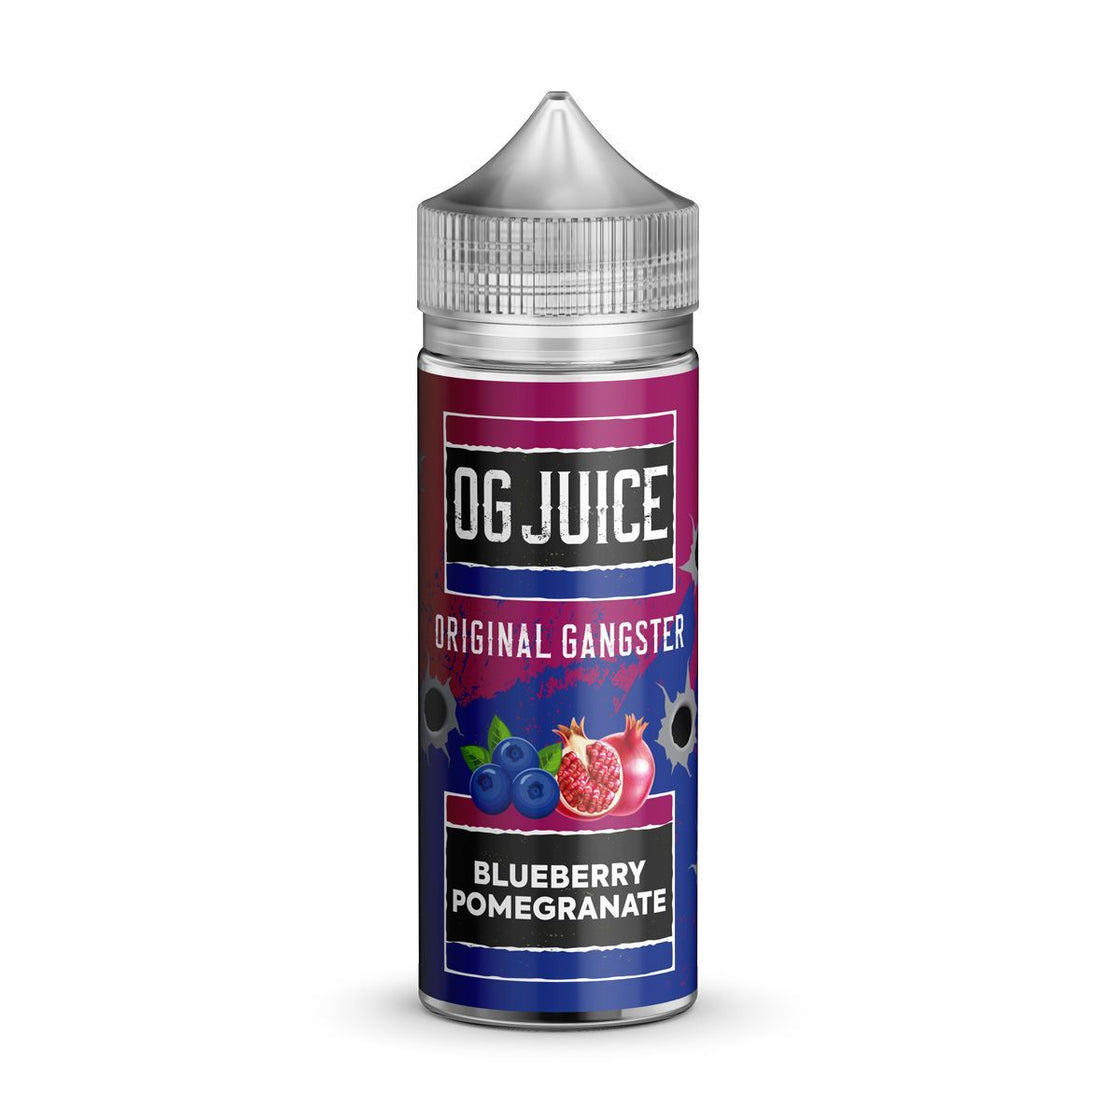 Blueberry Pomegranate Shortfill 100ml E-Liquid By OG Juice (Original Gangster)